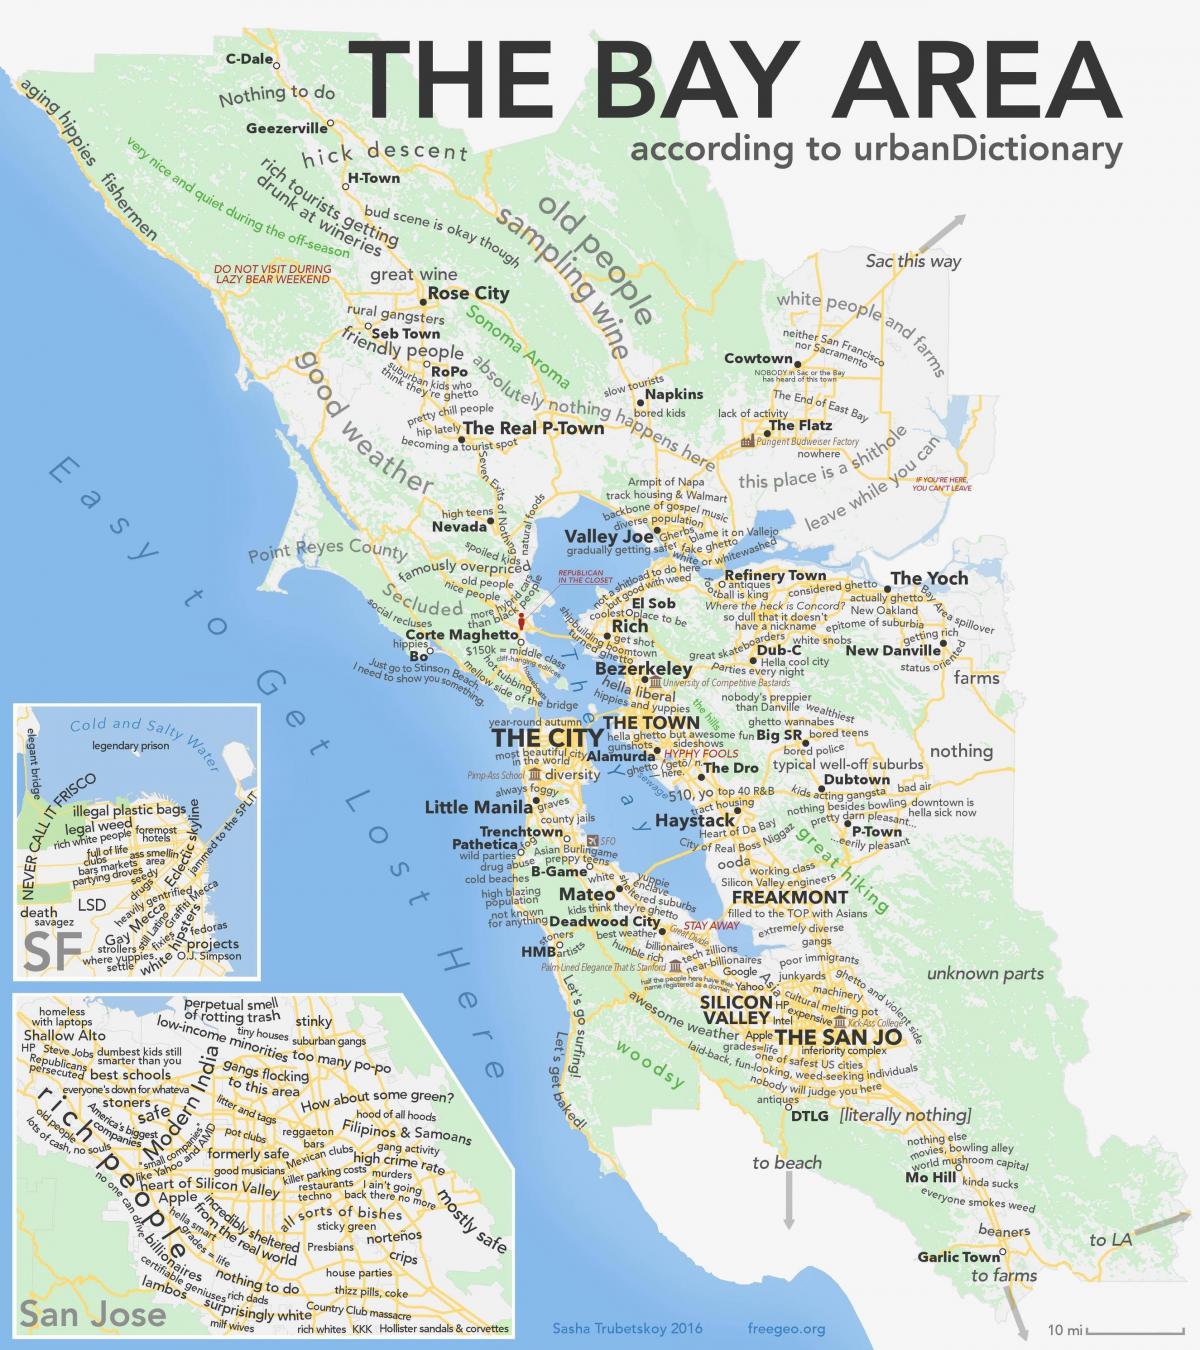 San Francisco bay area نقشه کالیفرنیا